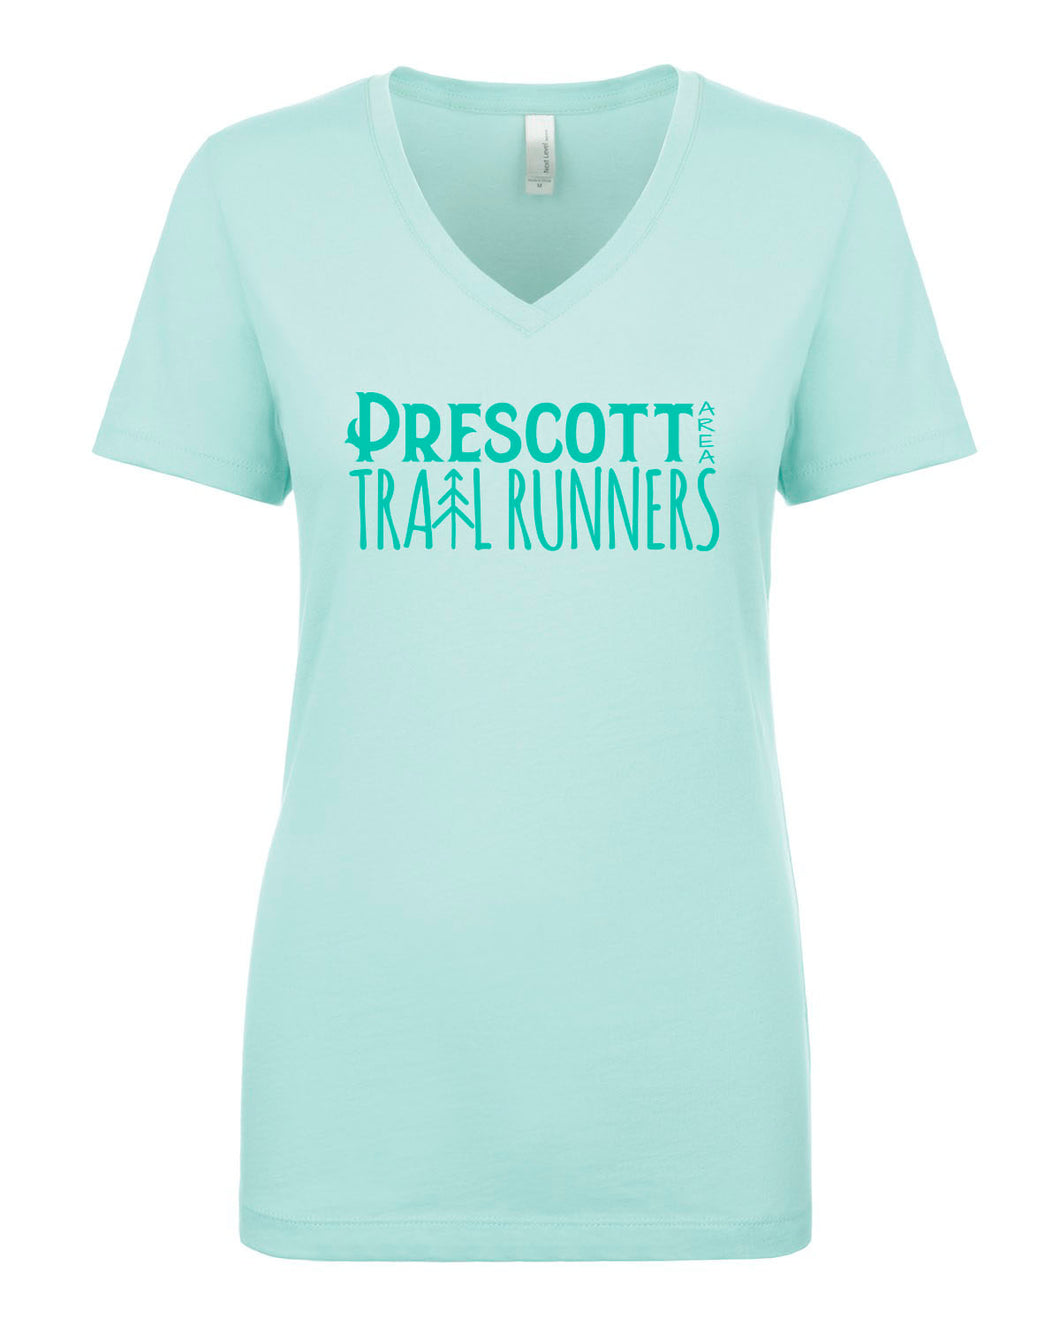 PATR - Prescott Area Trail Runners - Pine Tree Women's V-Neck T-Shirt